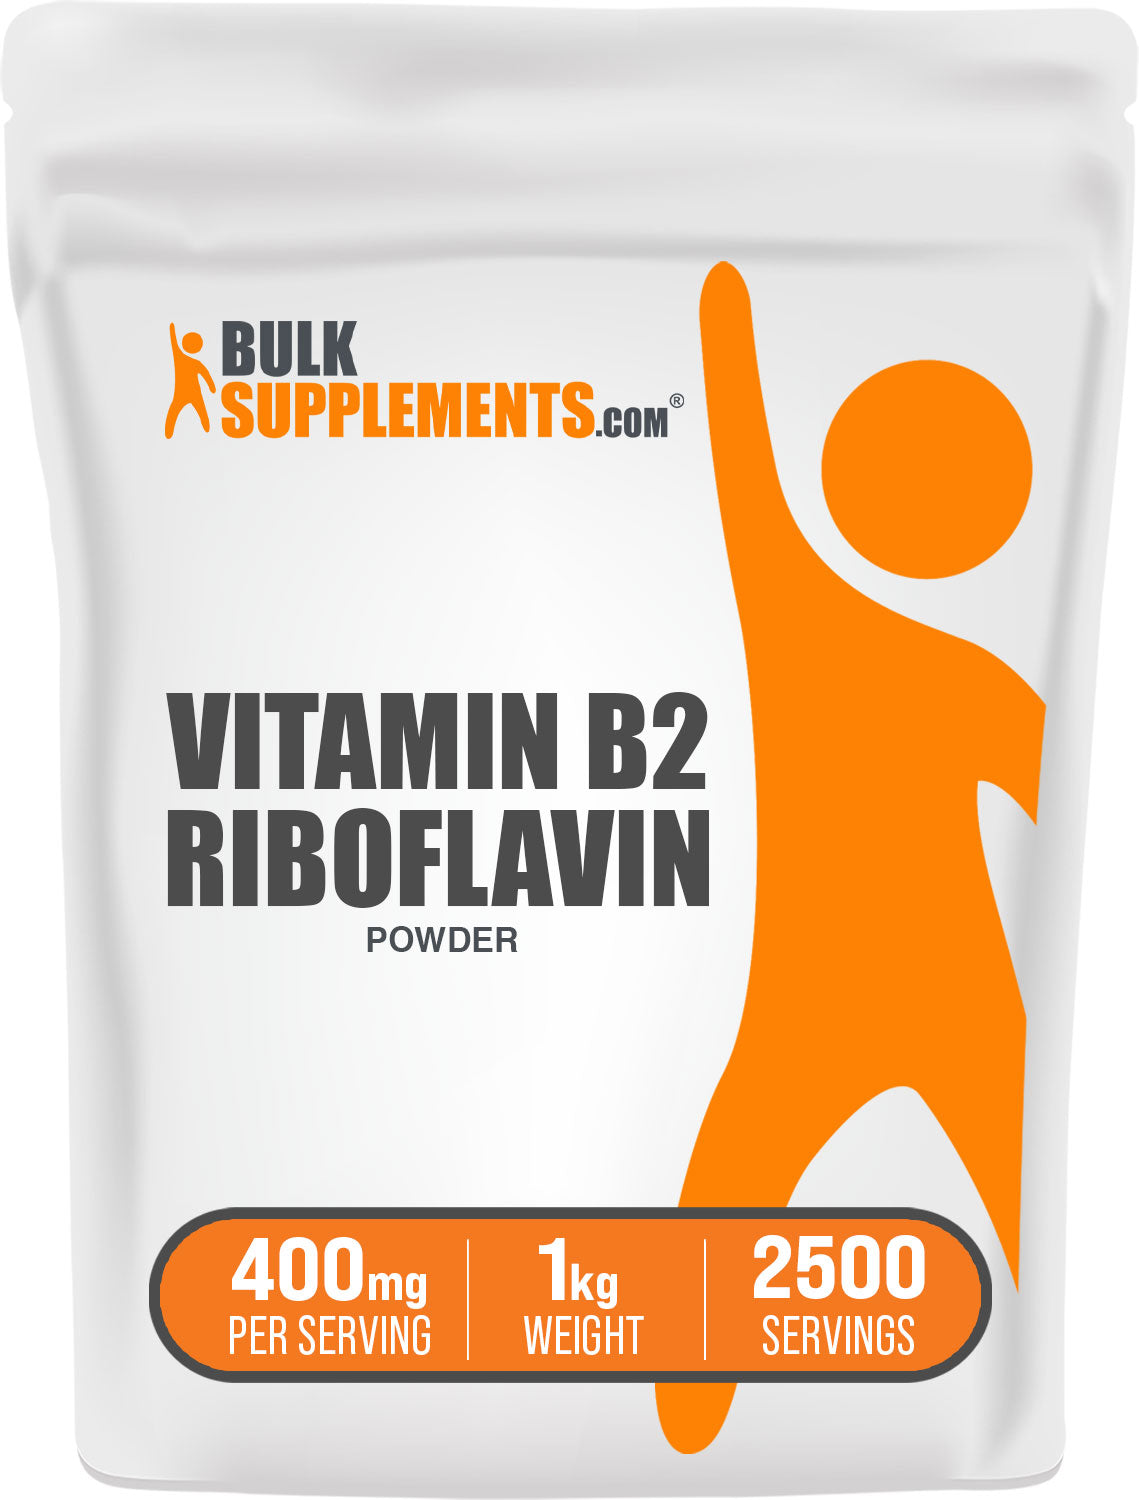 BulkSupplements Vitamin B2 Riboflavin Powder 1kg bag